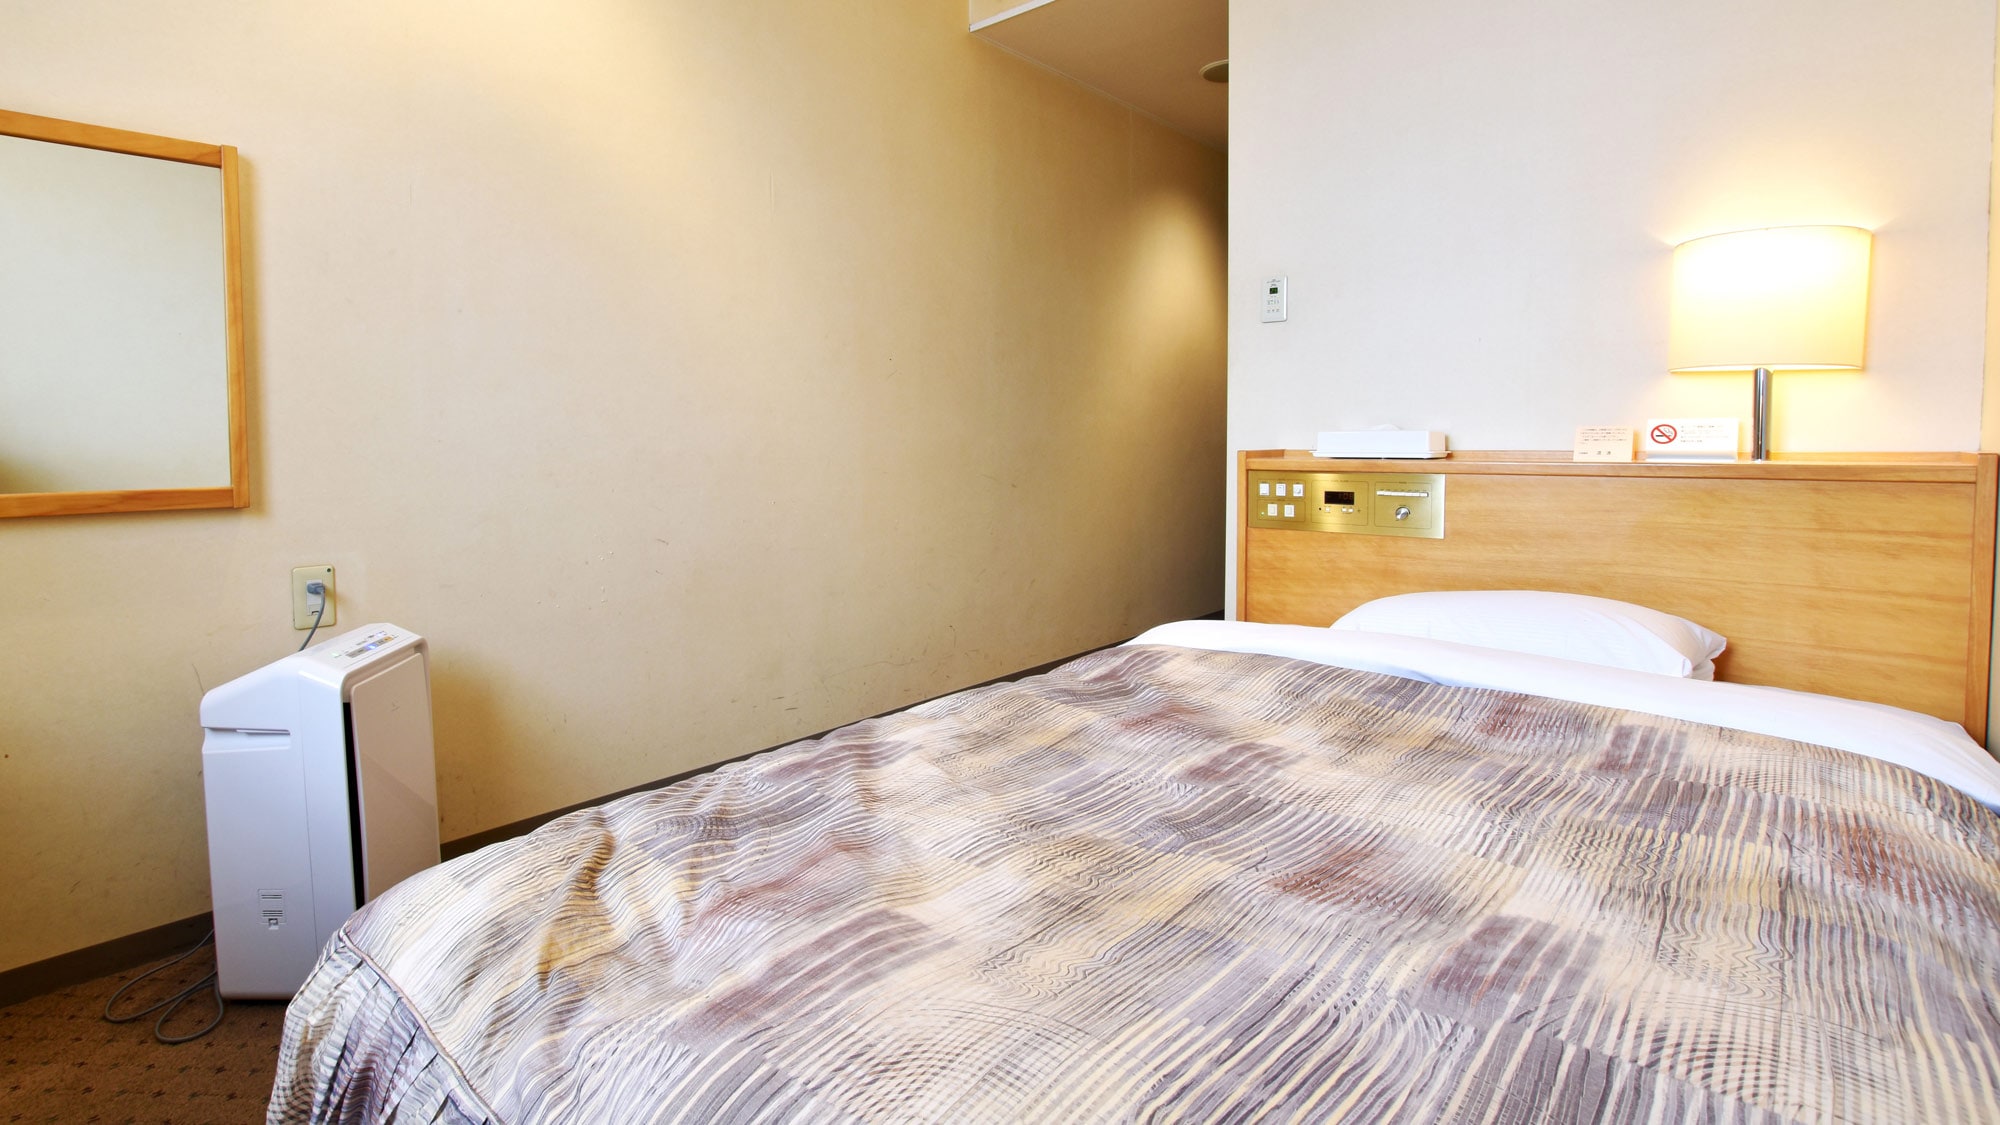 [Single room] Lebar tempat tidur 120 cm. Ini adalah kamar yang sederhana.